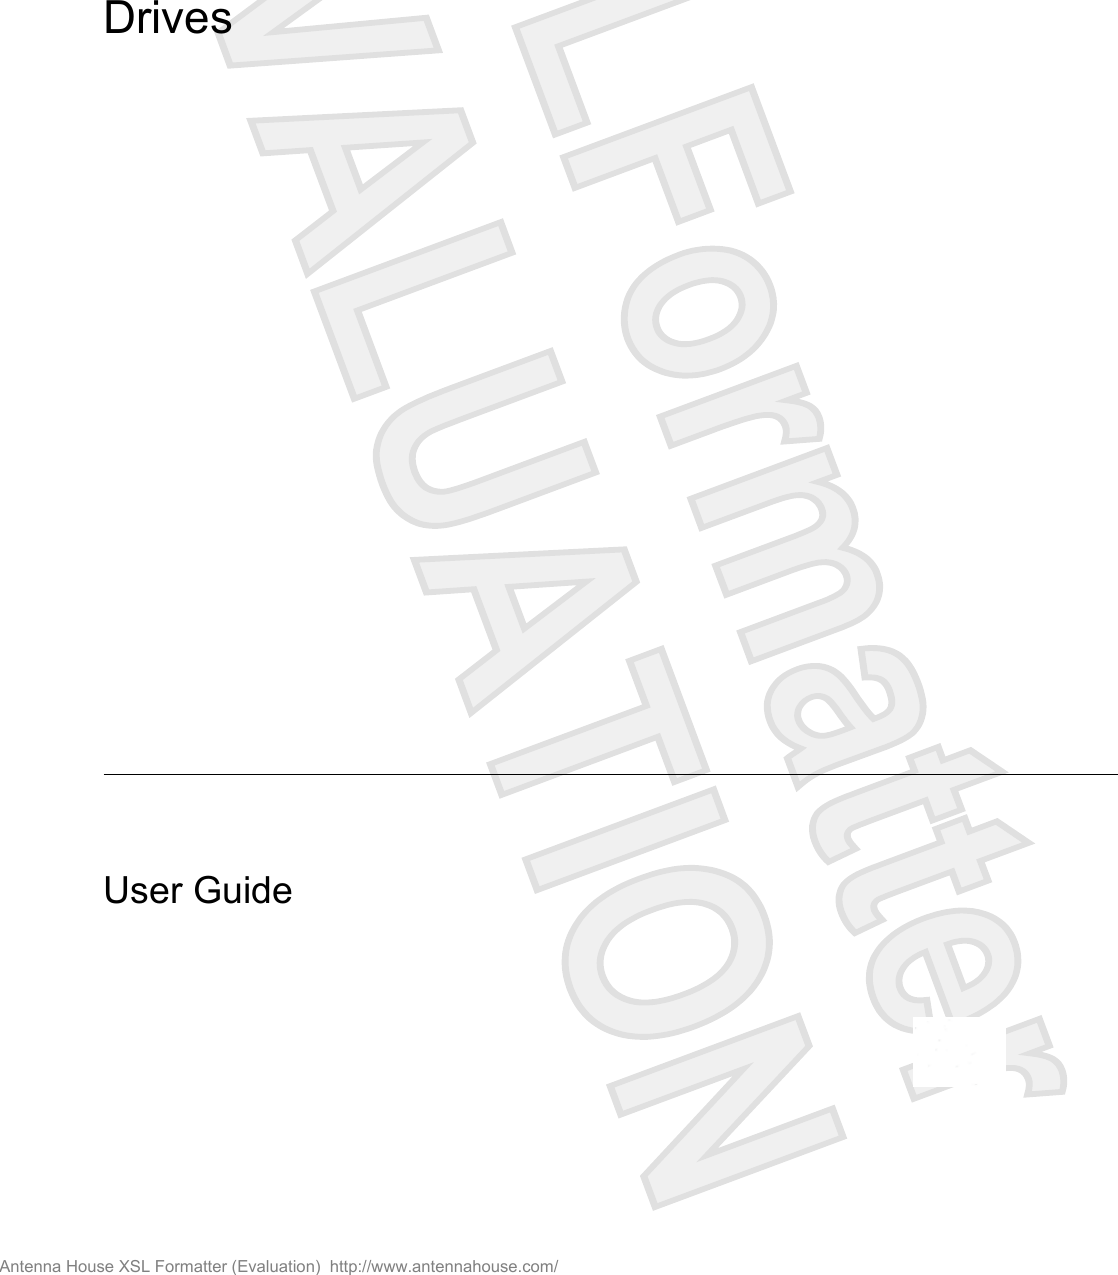 DrivesUser GuideAntenna House XSL Formatter (Evaluation)  http://www.antennahouse.com/